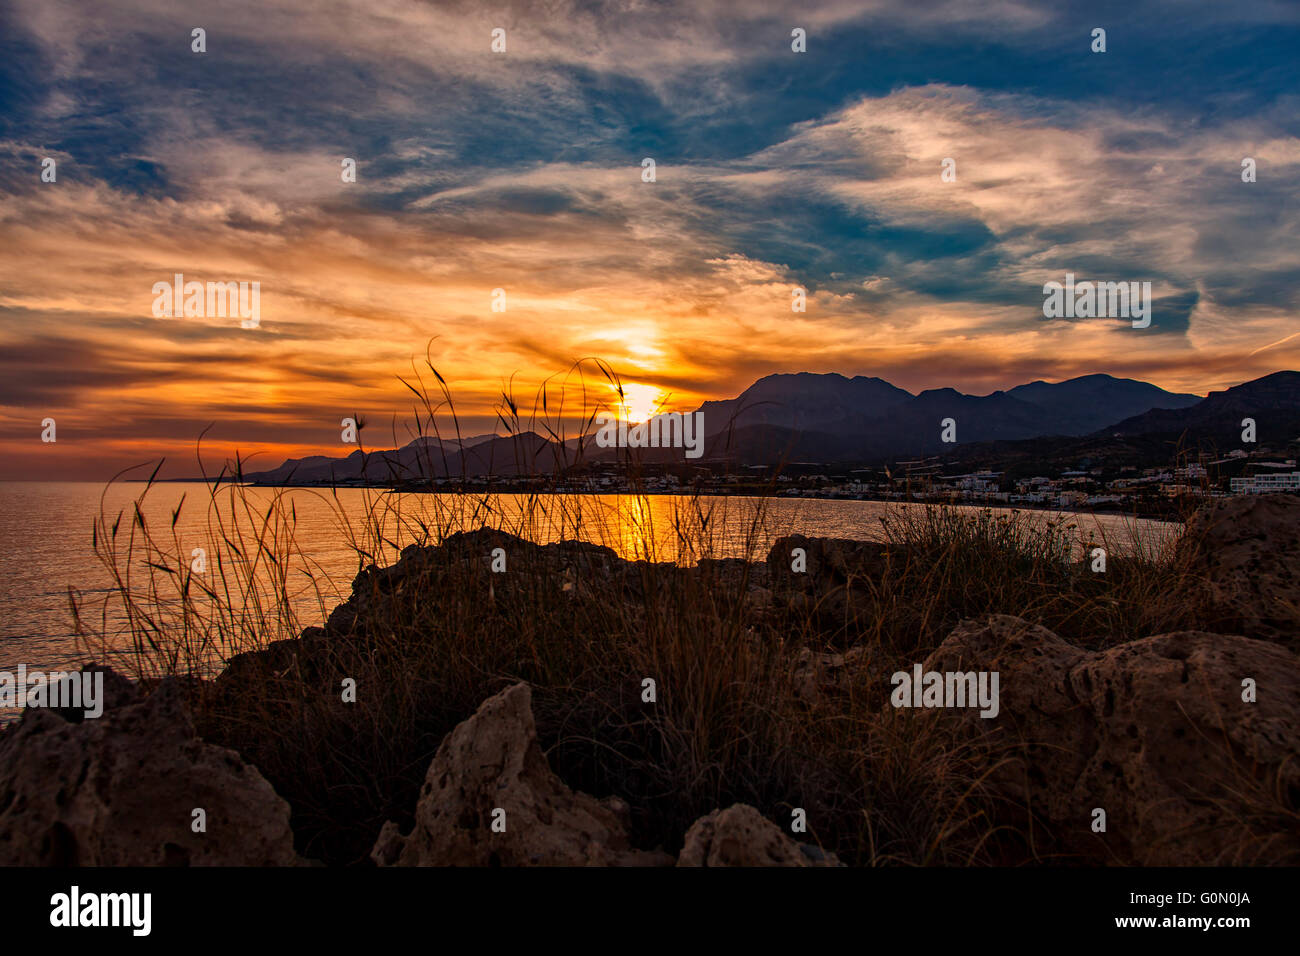 Image of dramatic rocky sunset landscape. Crete, Greece. Stock Photo